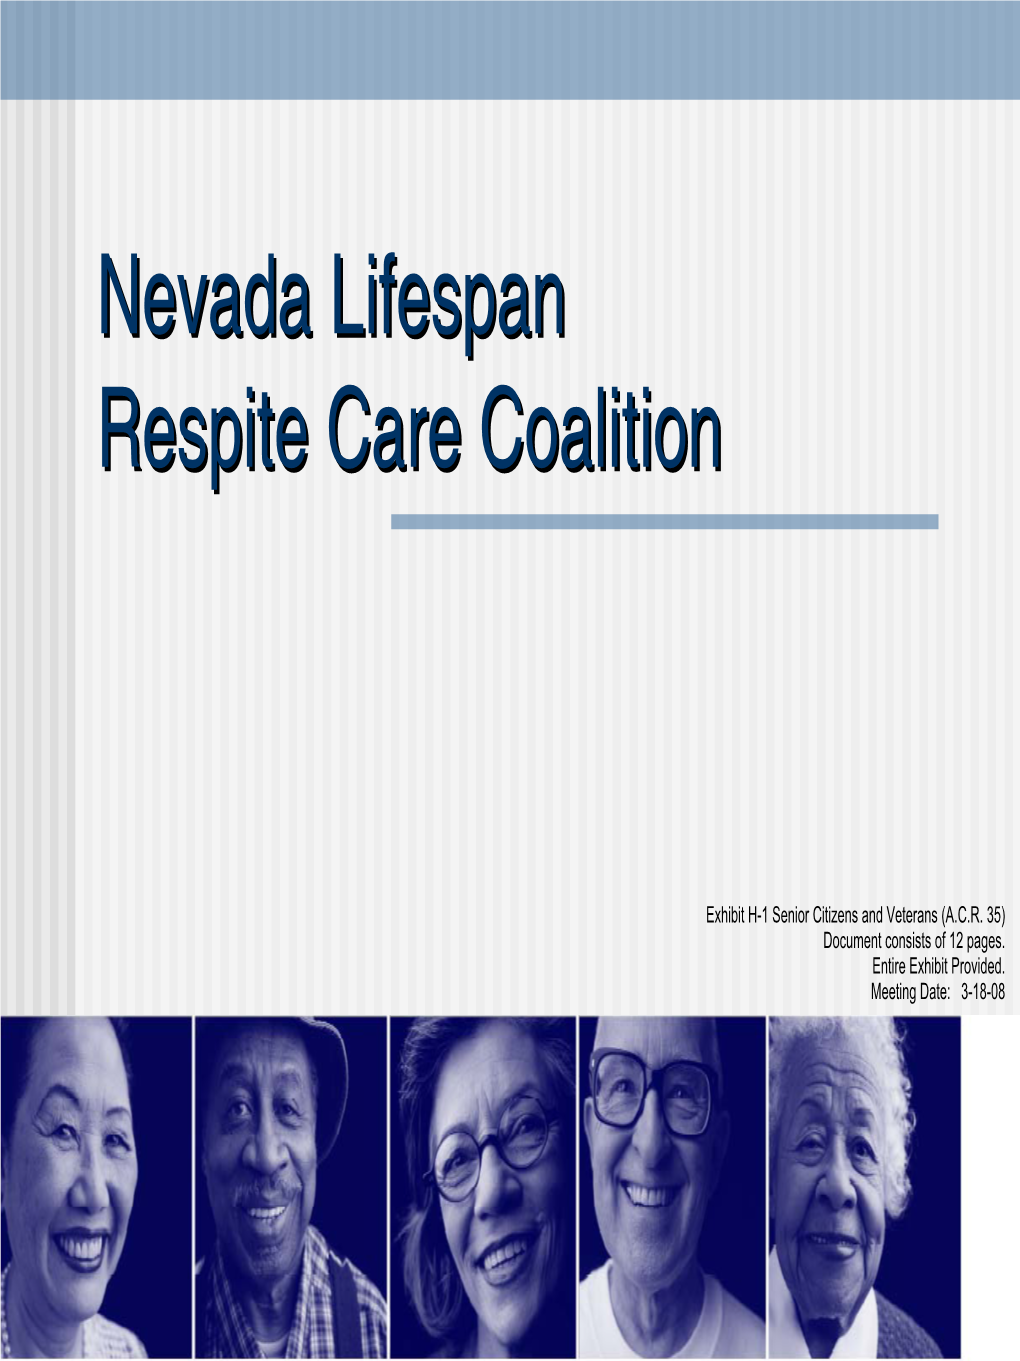 Nevada Lifespan Respite Care Coalition Founding Members